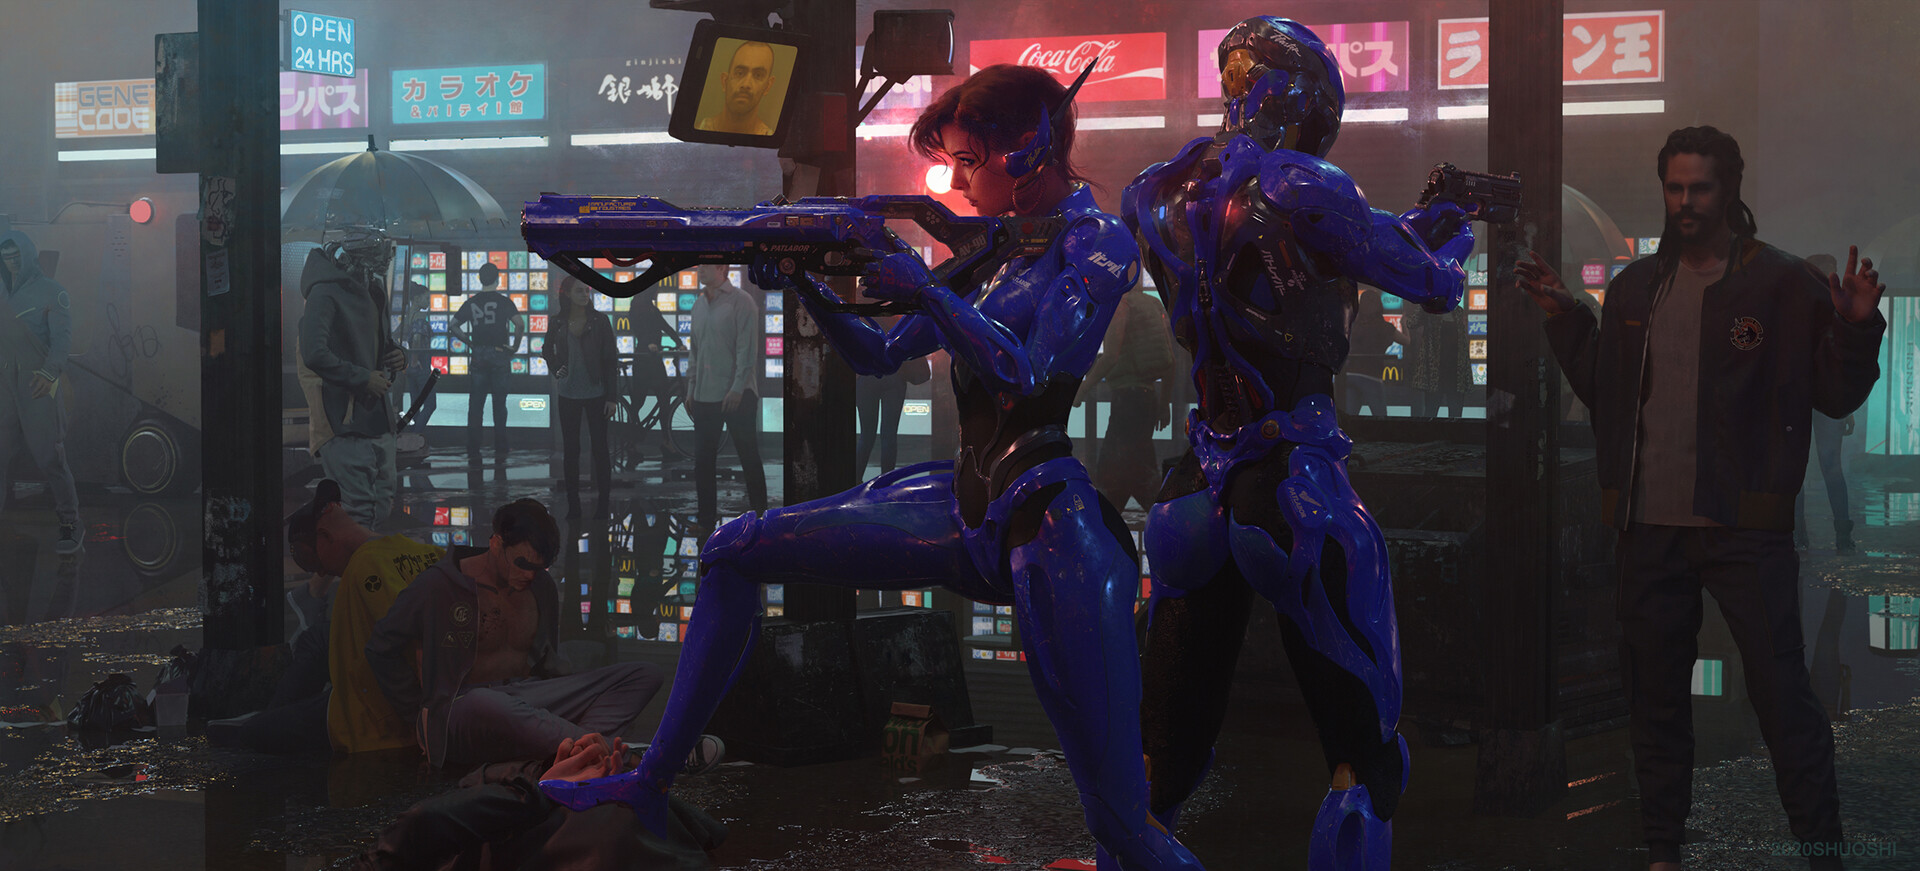 Female Warrior Science Fiction 3D Graphics Blue Cyborg Robot 1920x871